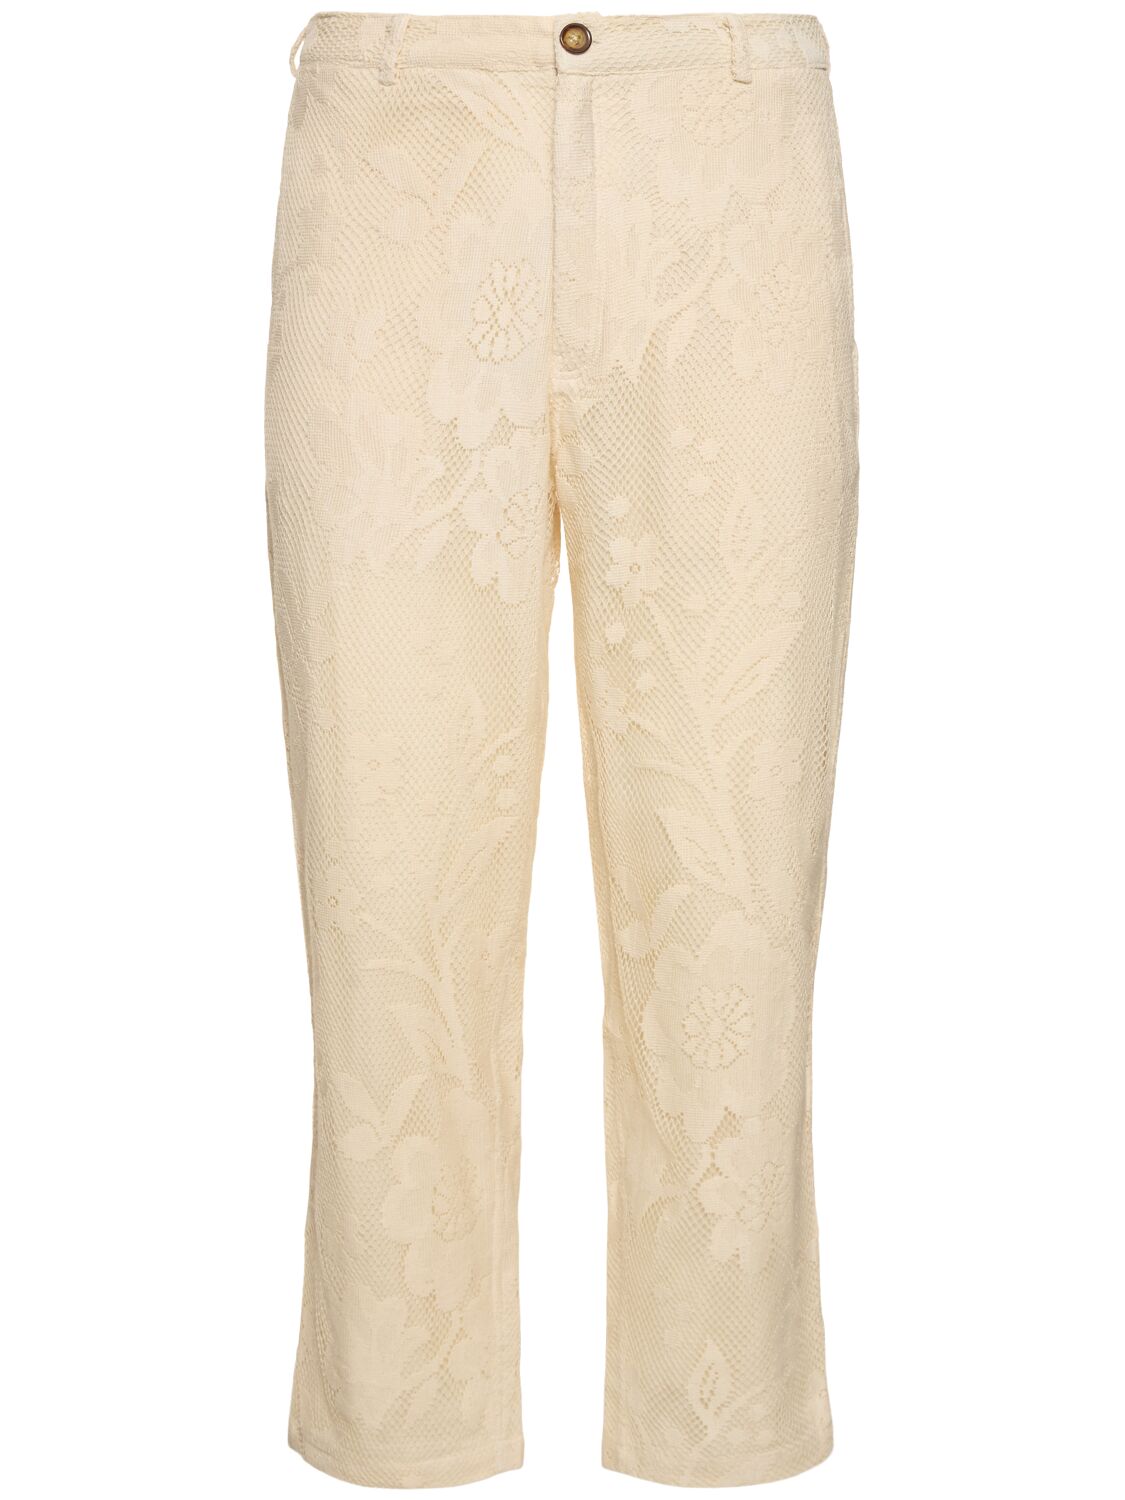 Image of Cotton Lace Formal Pants